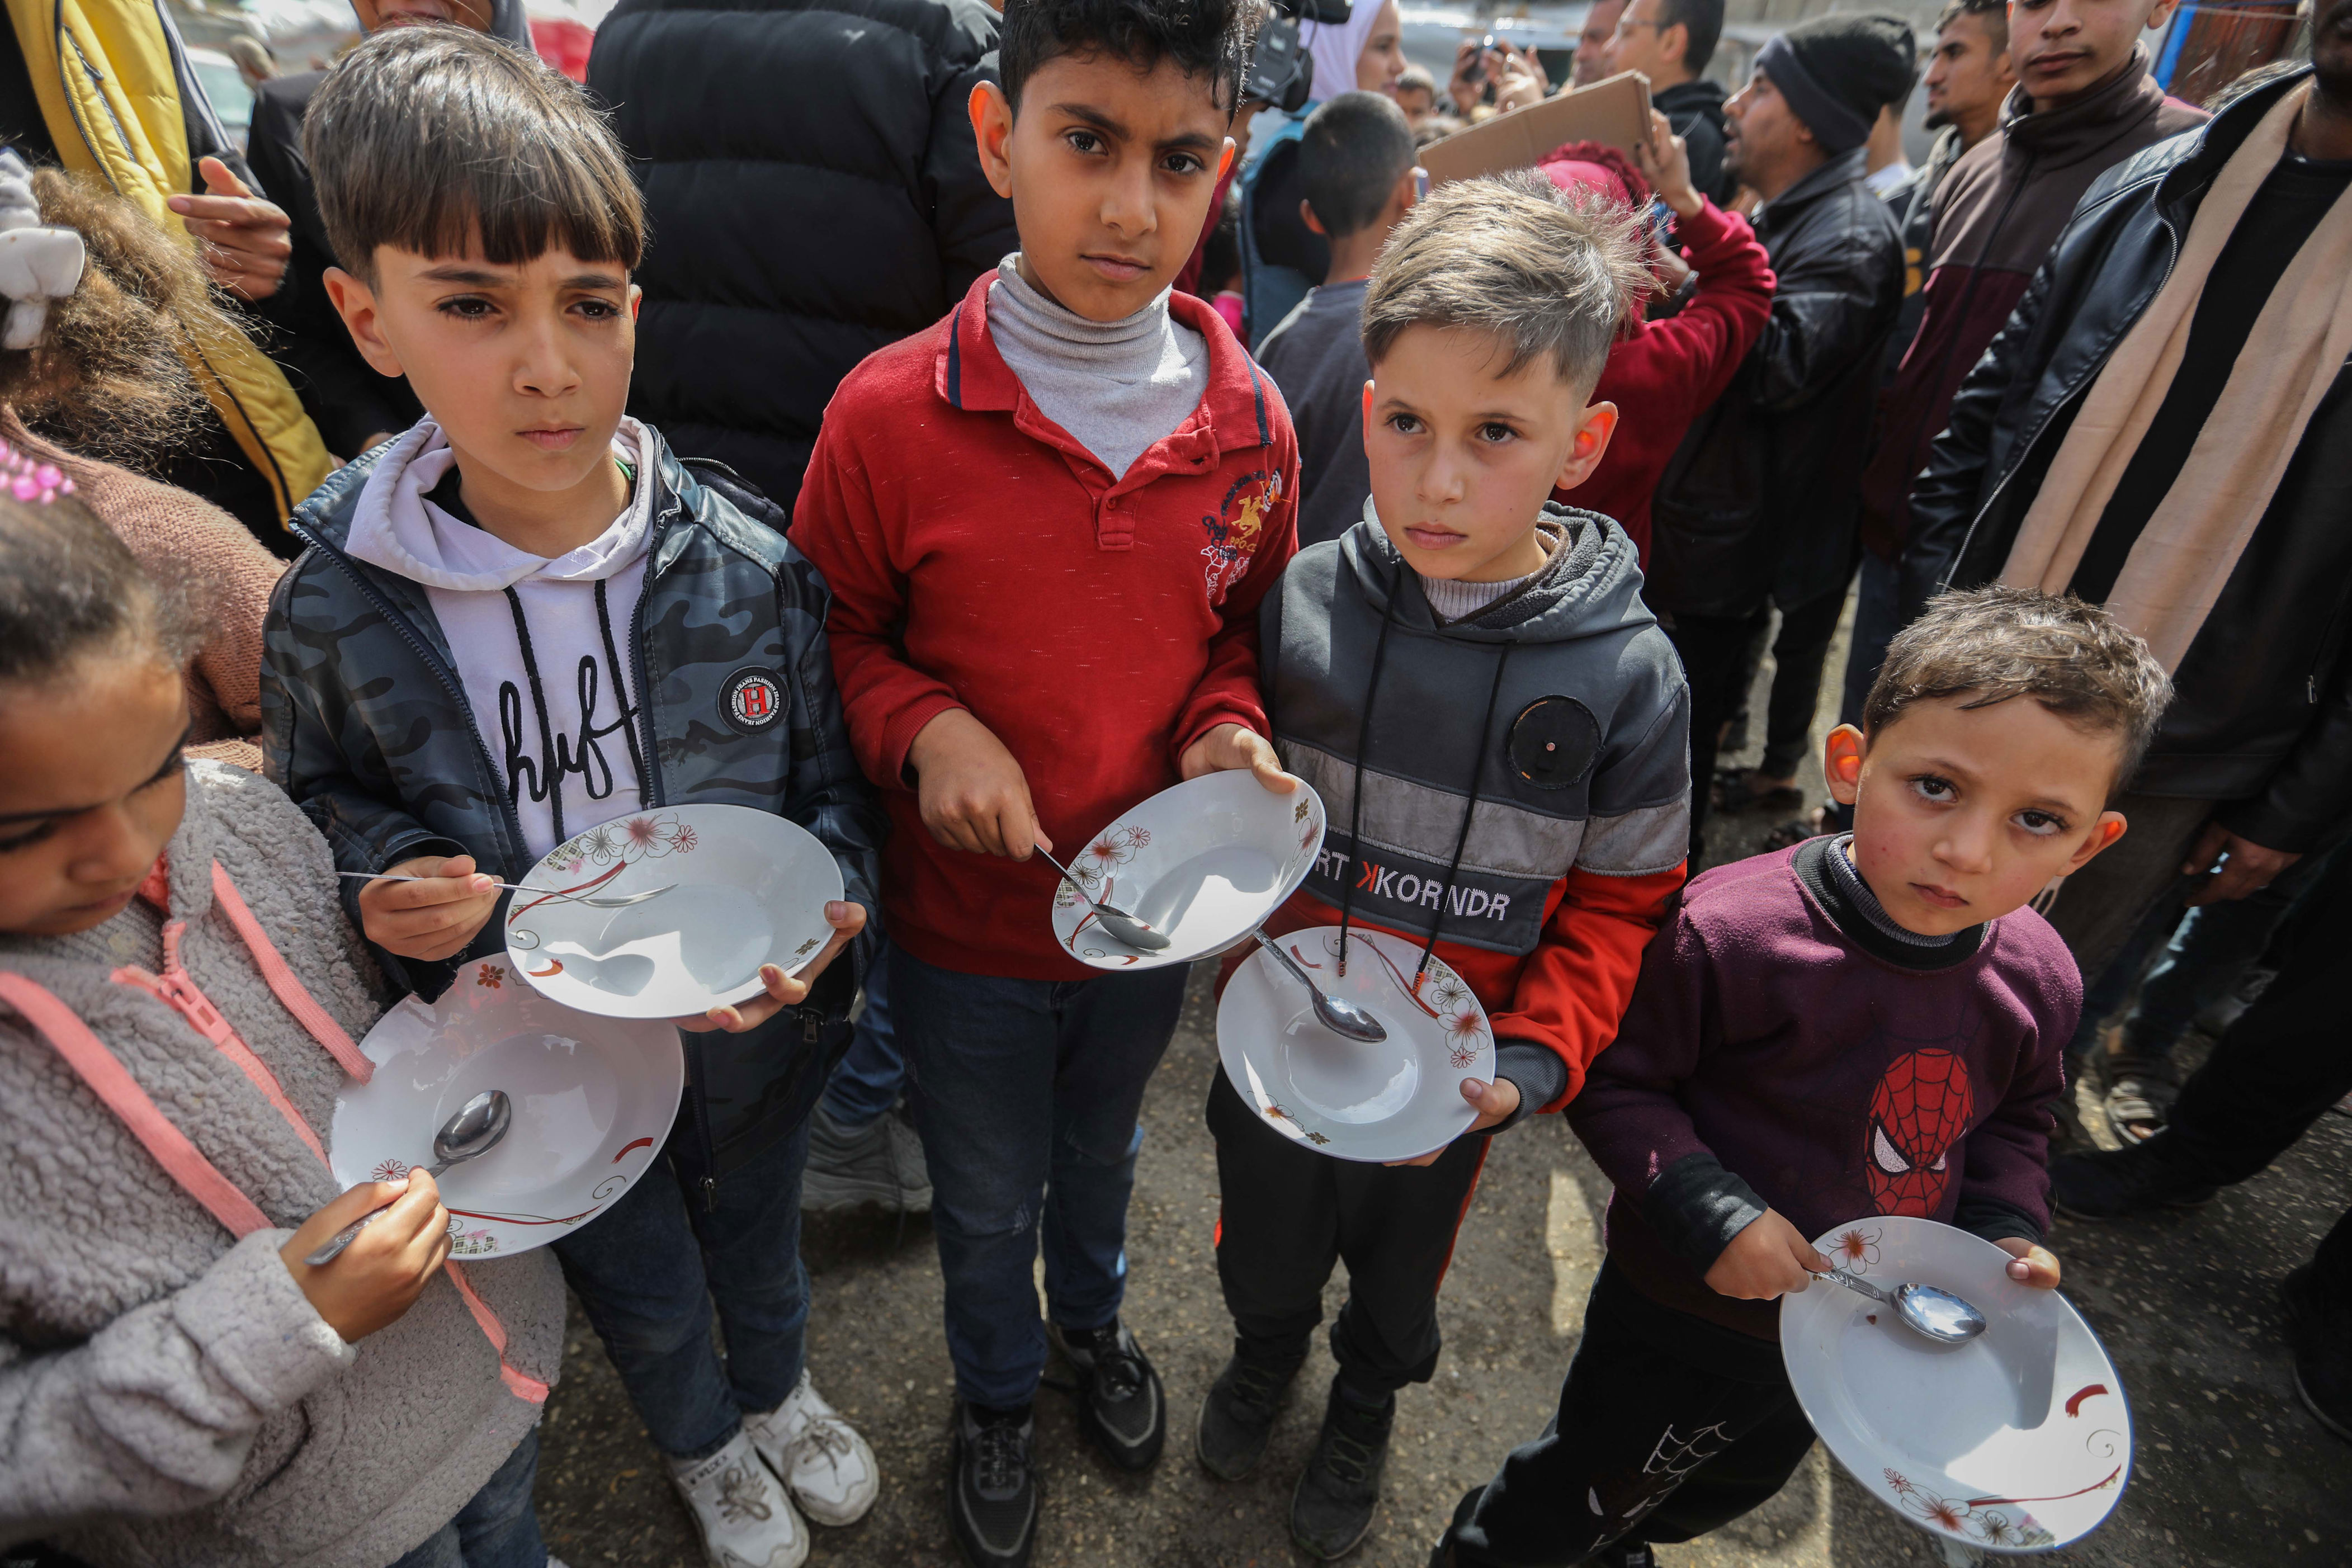 world food program director cindy mccain: parts of gaza in 'full-blown famine'